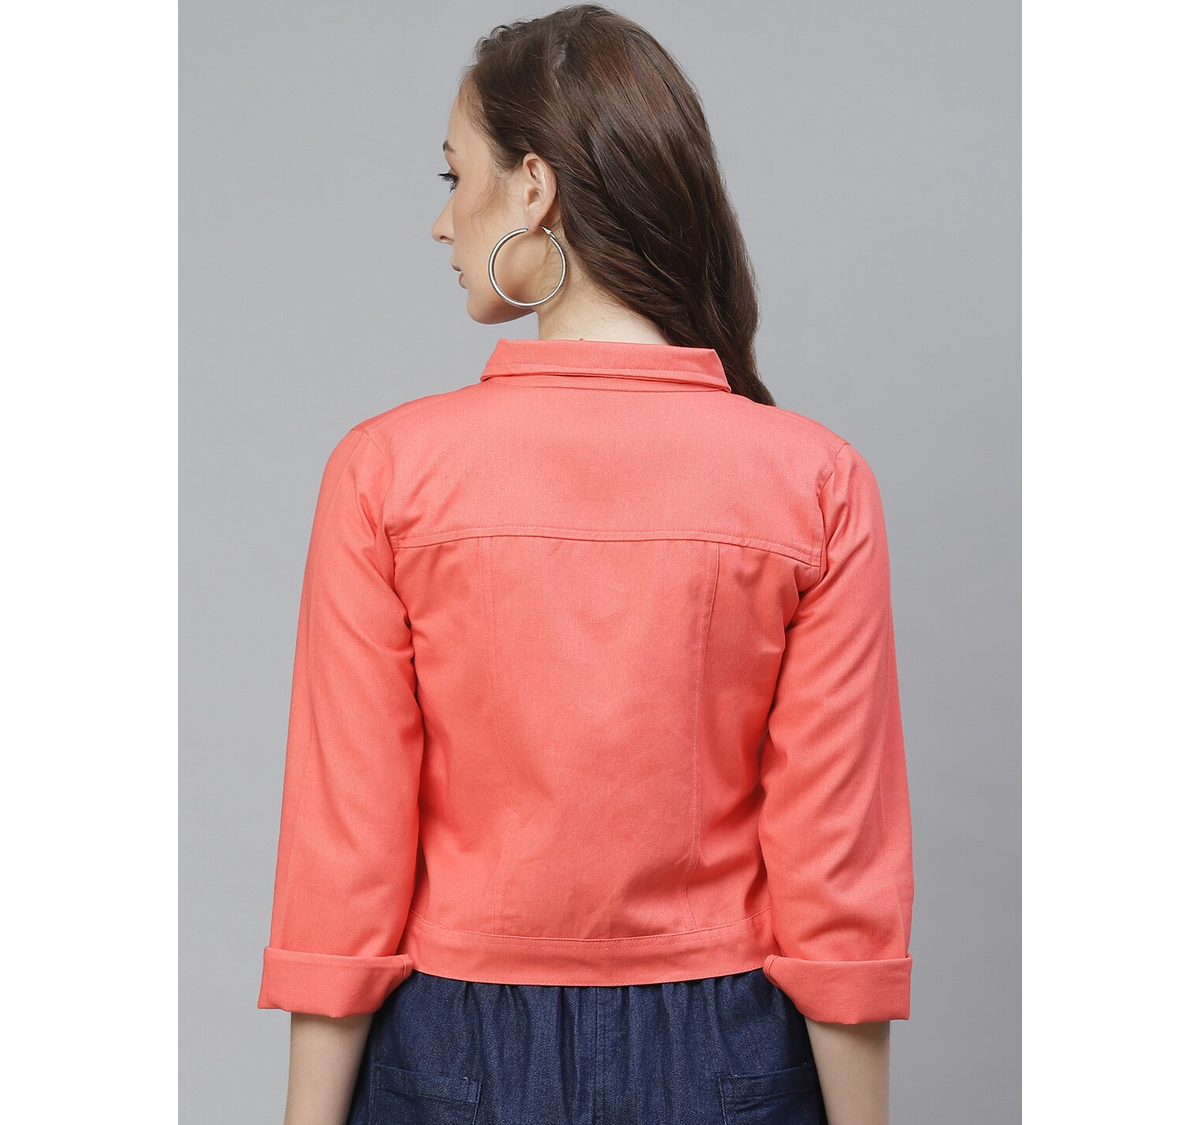 Women's Charter Club Denim Jacket Color Sandy Pink Size M | eBay